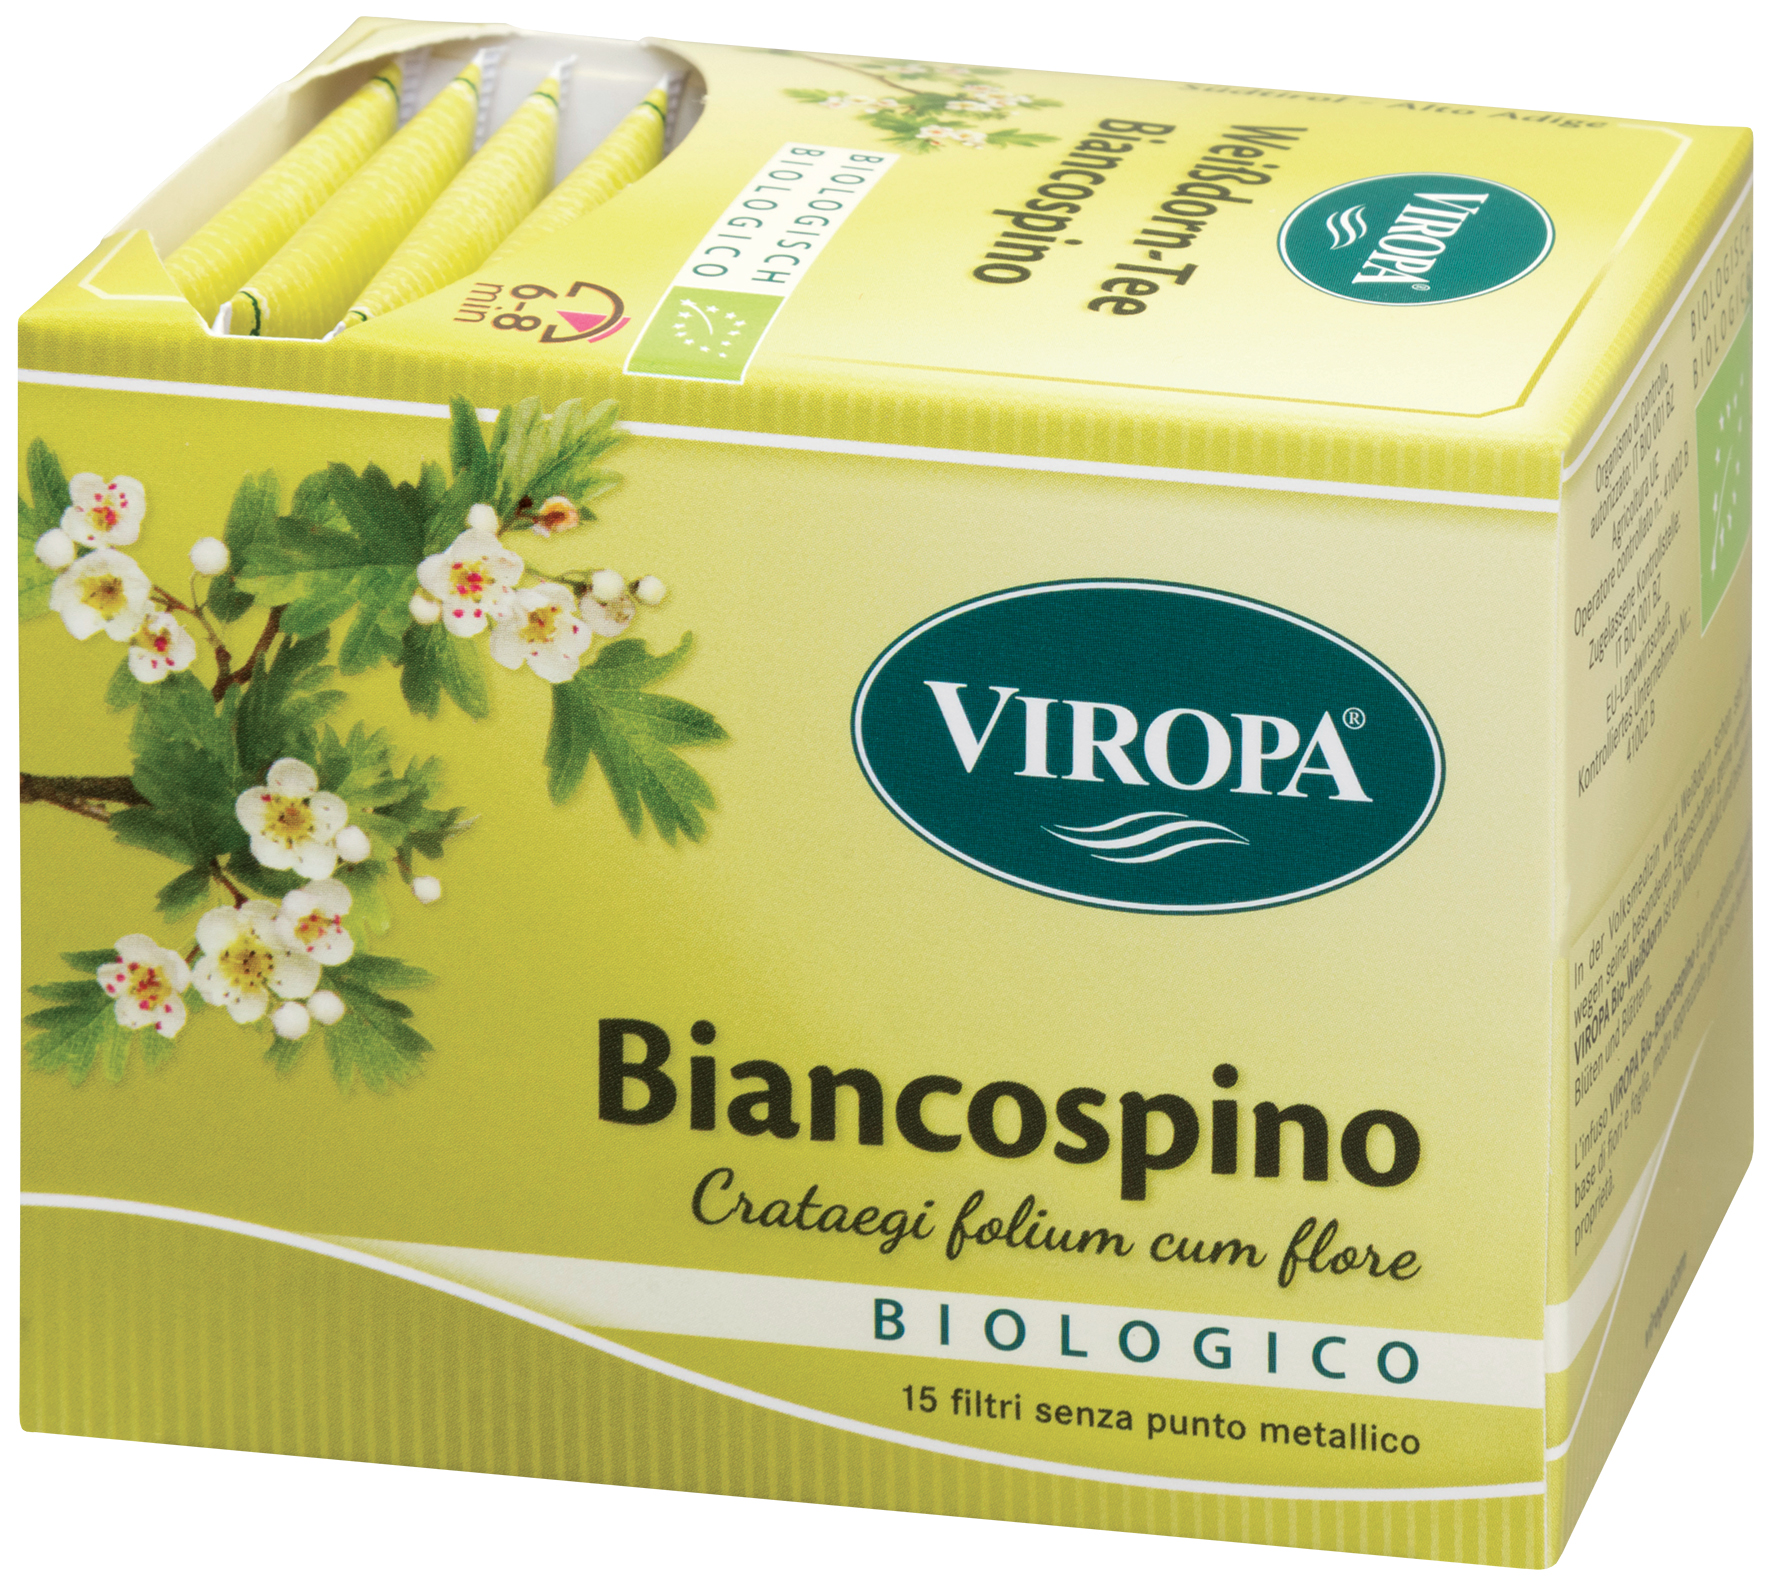 Biancospino Bio Viropa